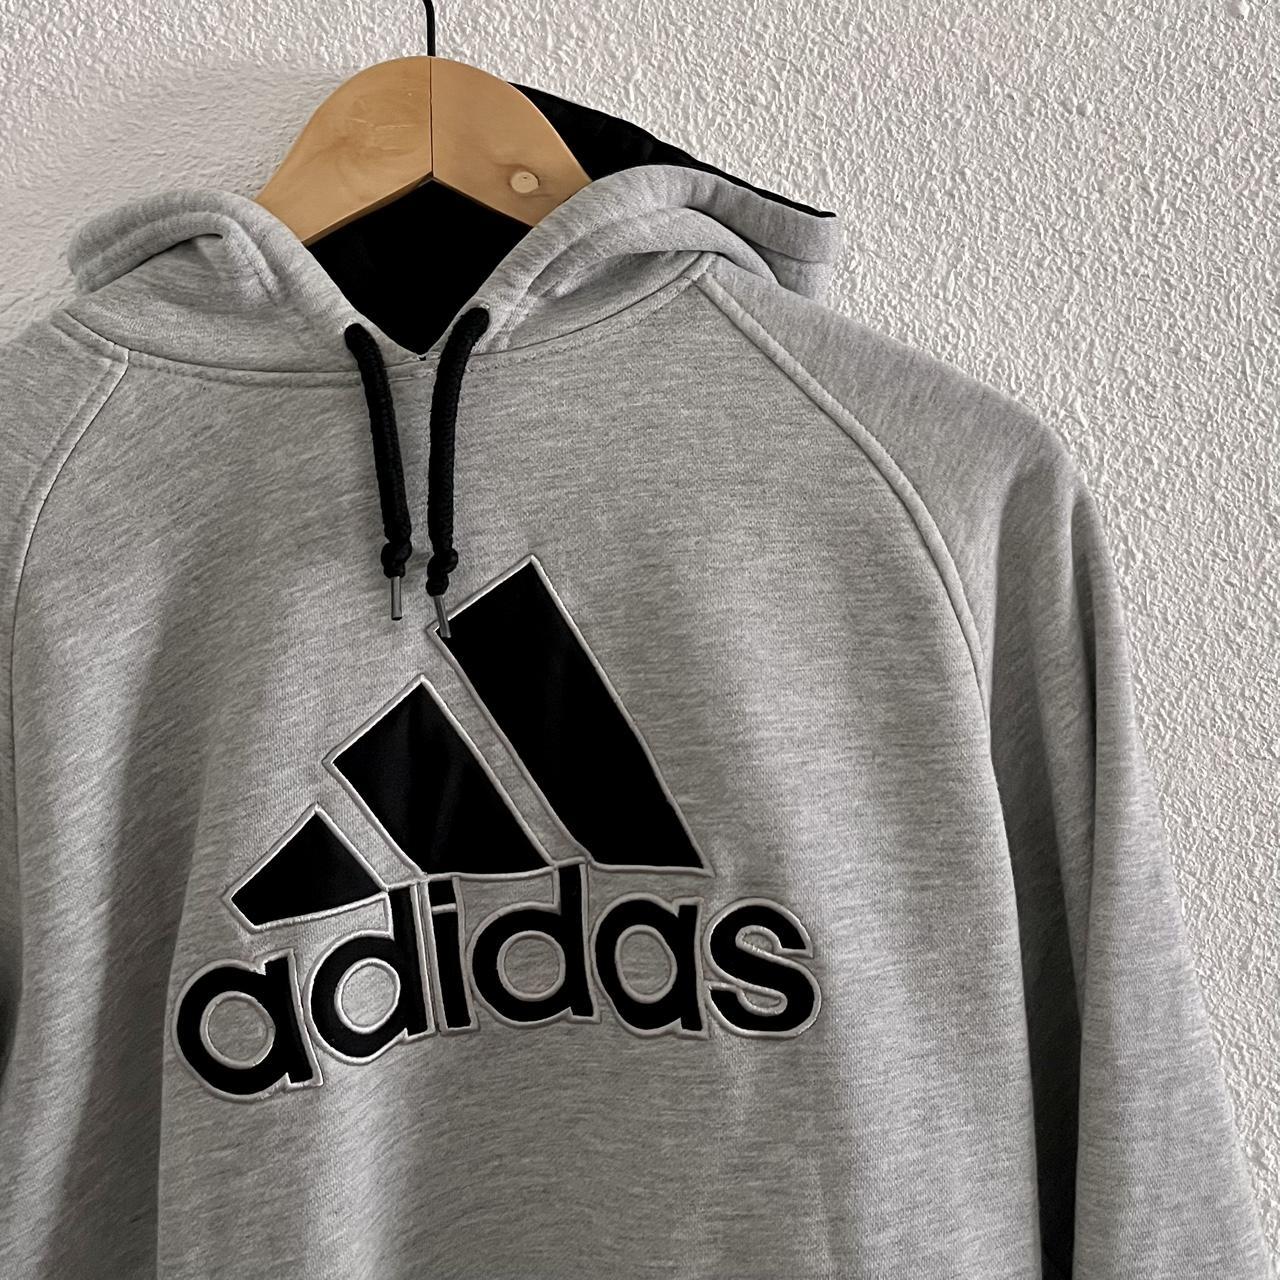 Adidas hoodie | tagged mens medium | small stain on... - Depop